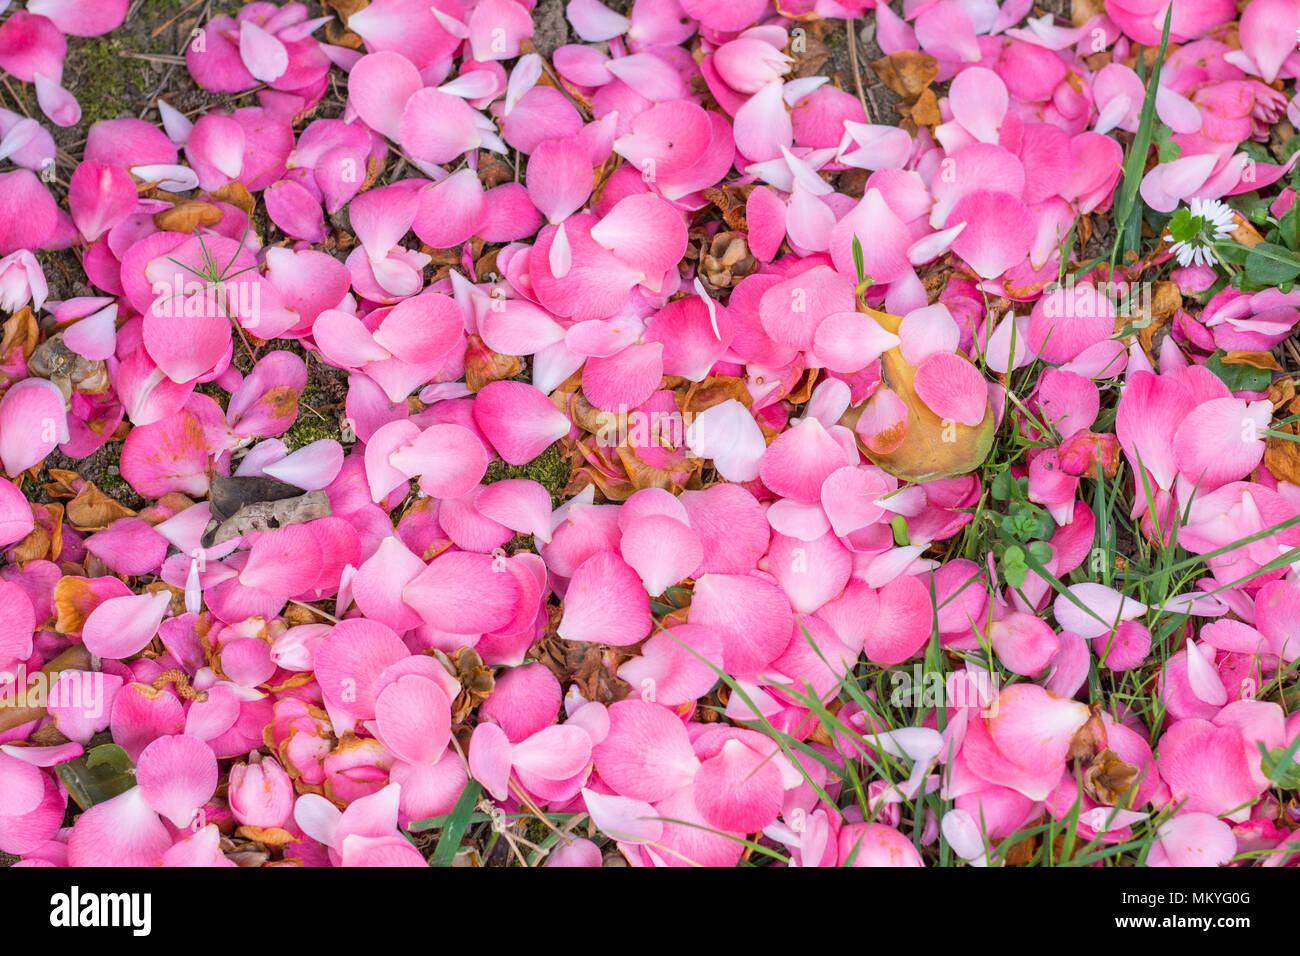 background of Fallen petals of pink camellia Stock Photo